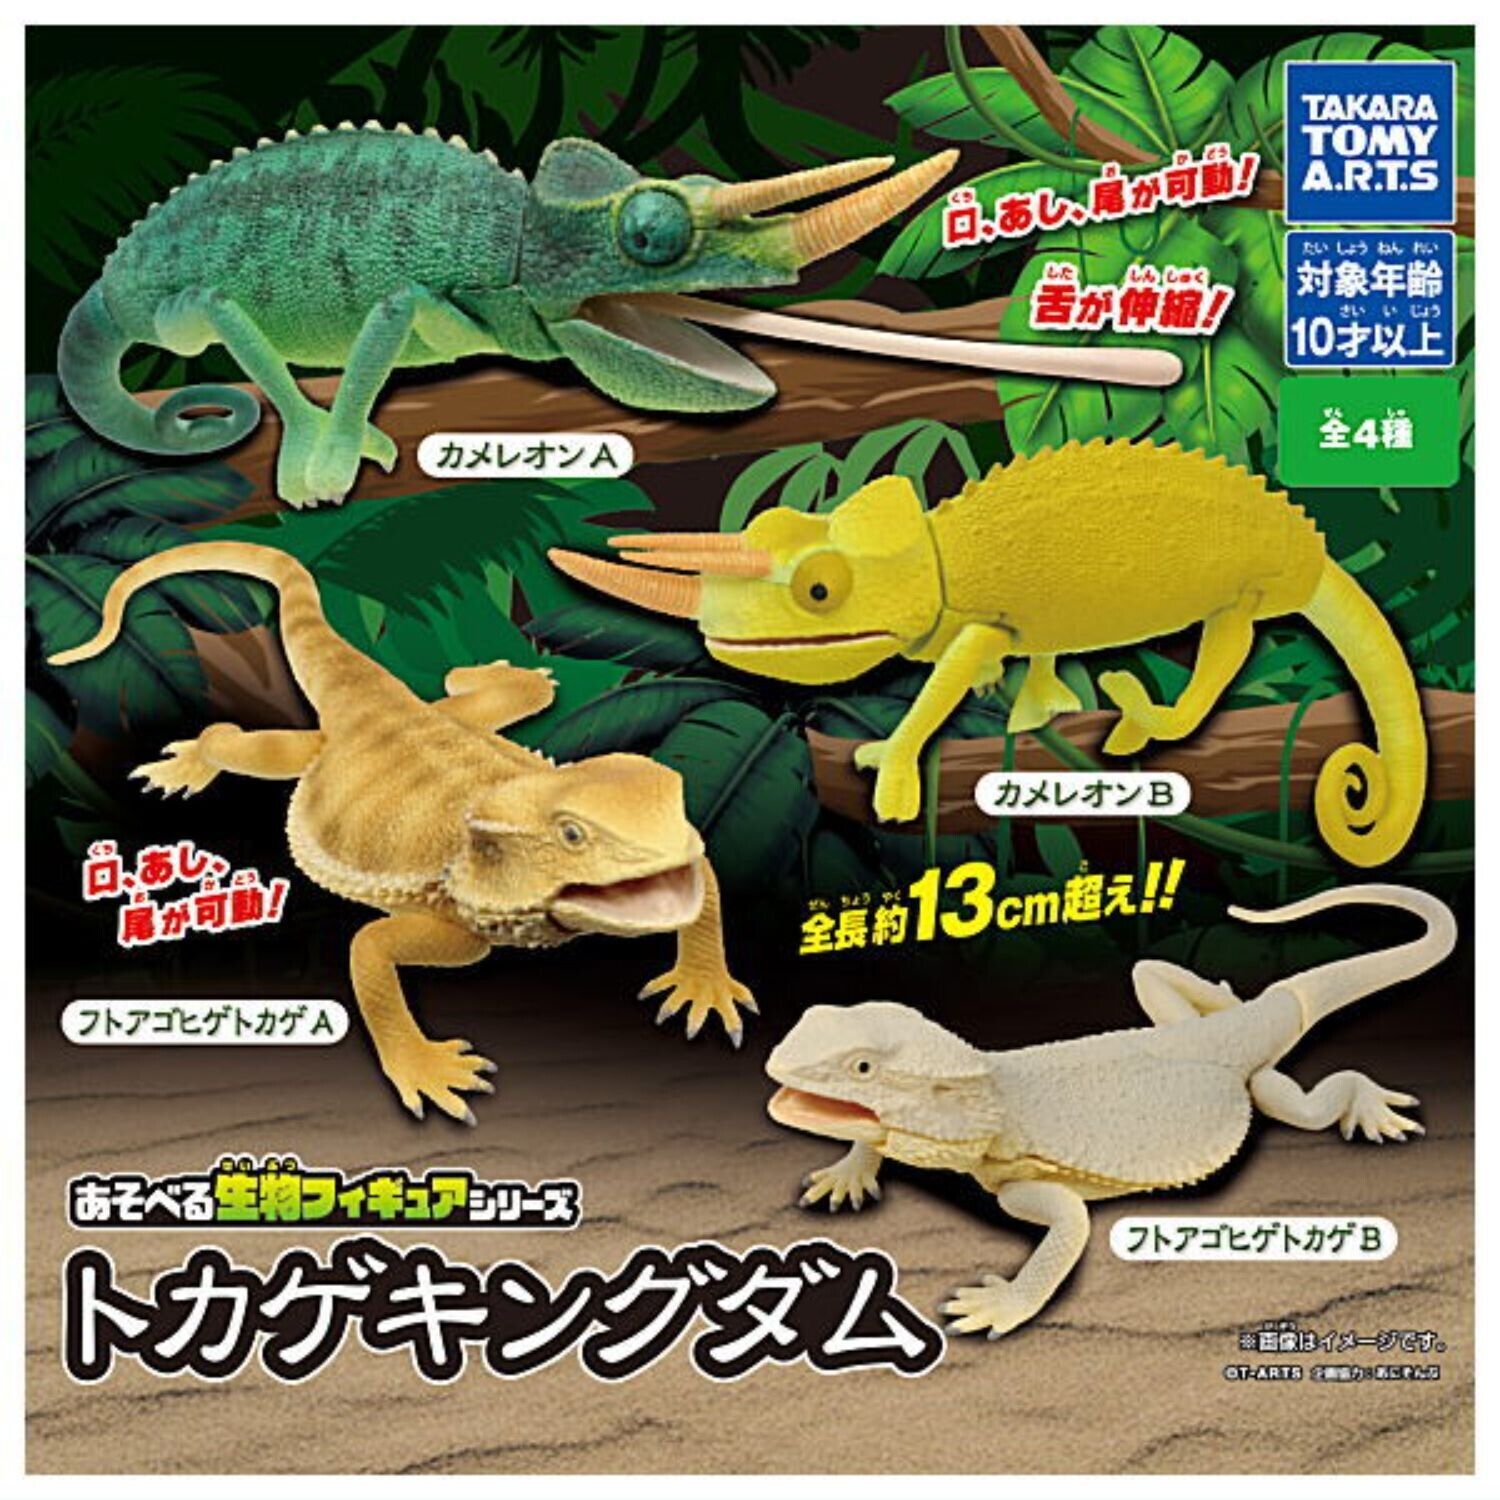 Lizard kingdom Mascot Capsule Toy 4 Types Full Comp Set Gacha New Japan